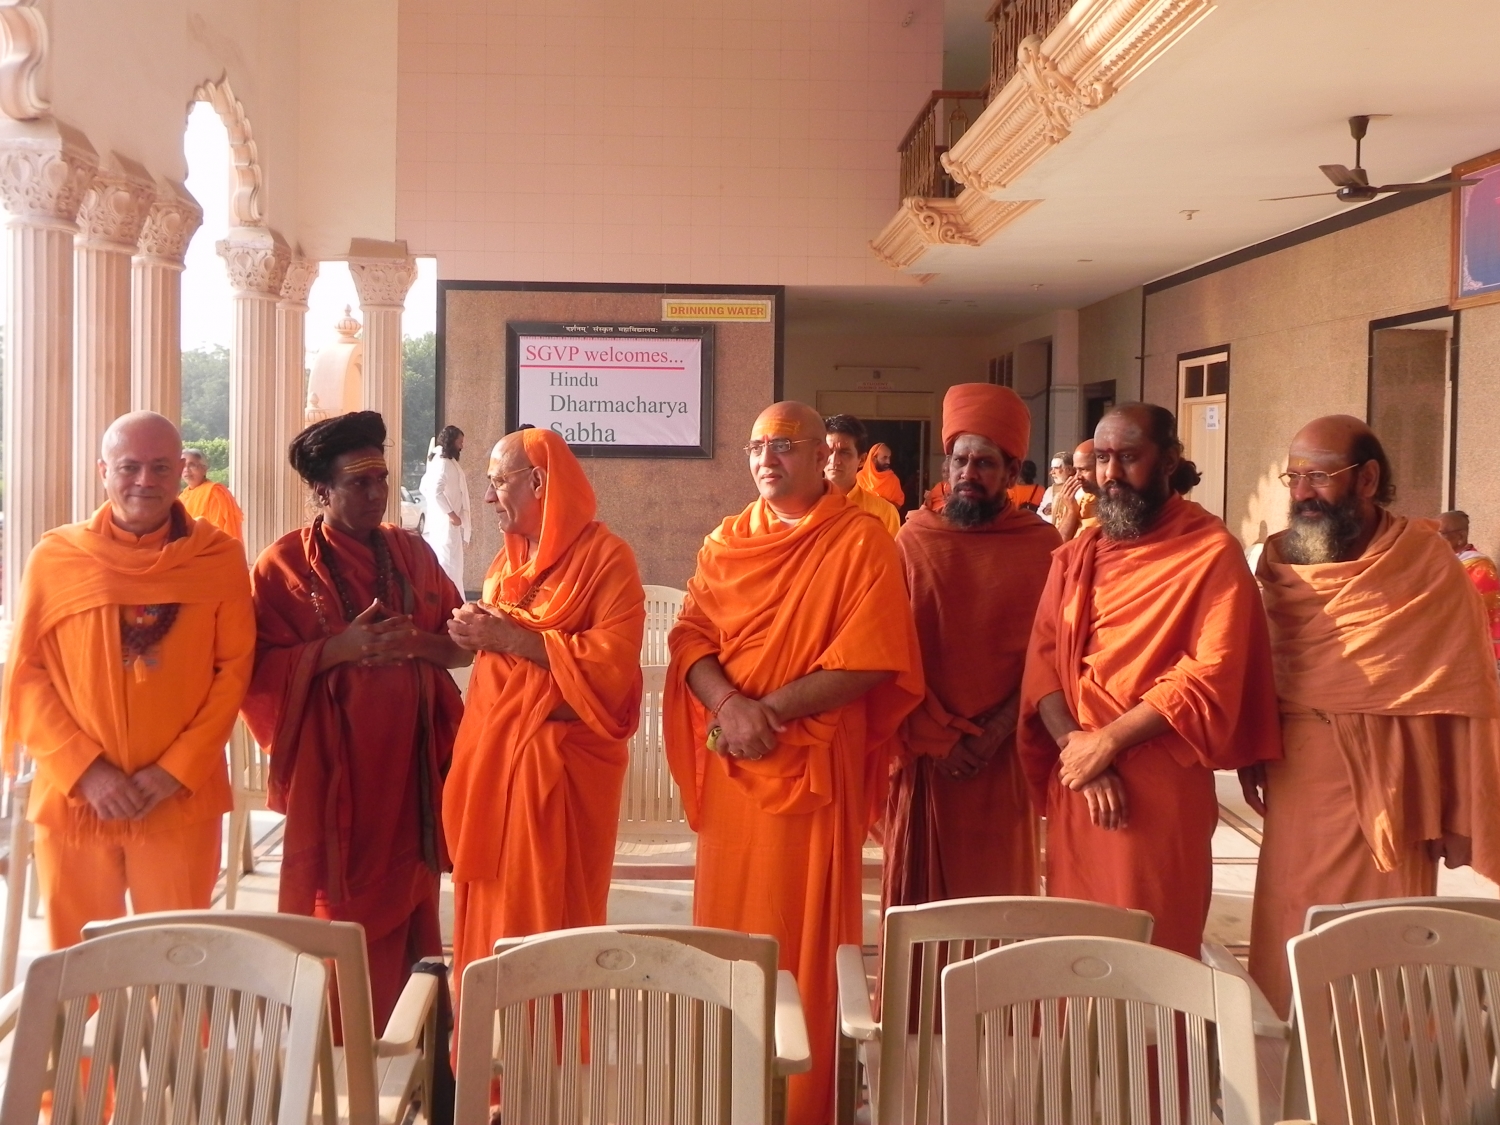 Hindu Dharma Acharya Sabha 5th Convention - Índia, Ahmedabad - 2012, Novembro